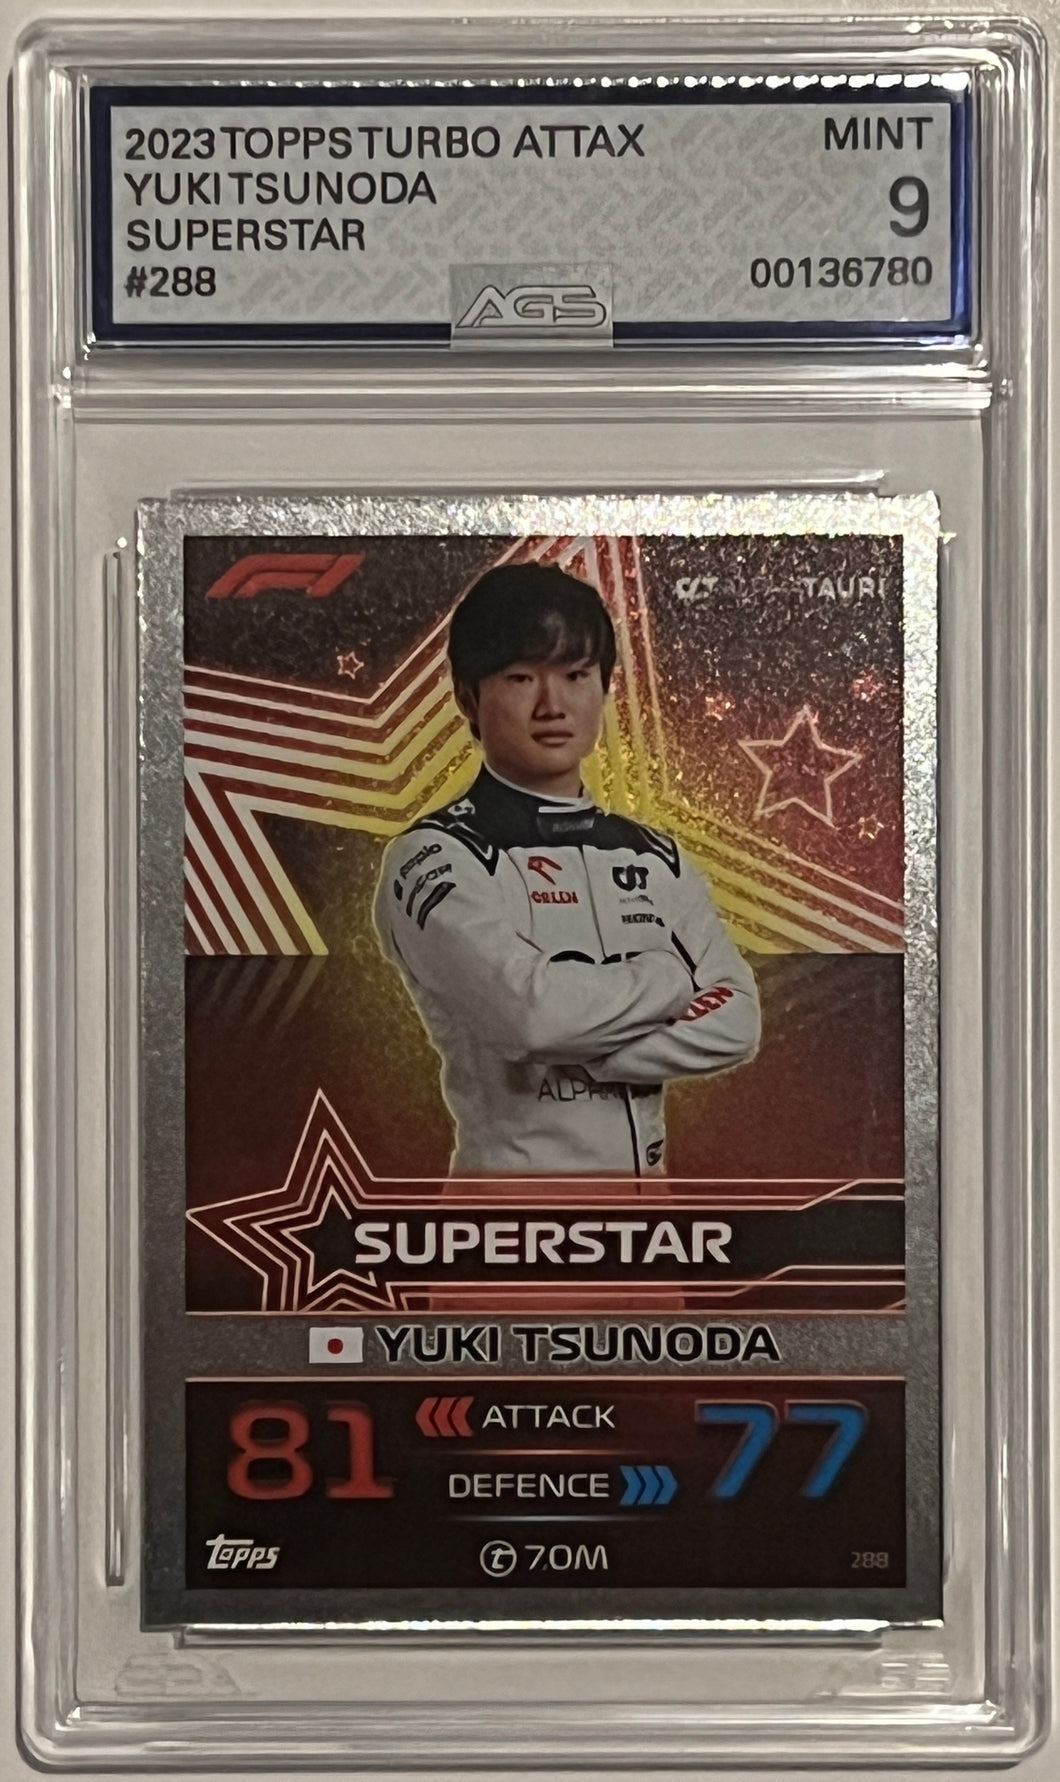 Yuki Tsunoda #288 Superstar 2023 F1 Topps Turbo Attax AGS Mint 9